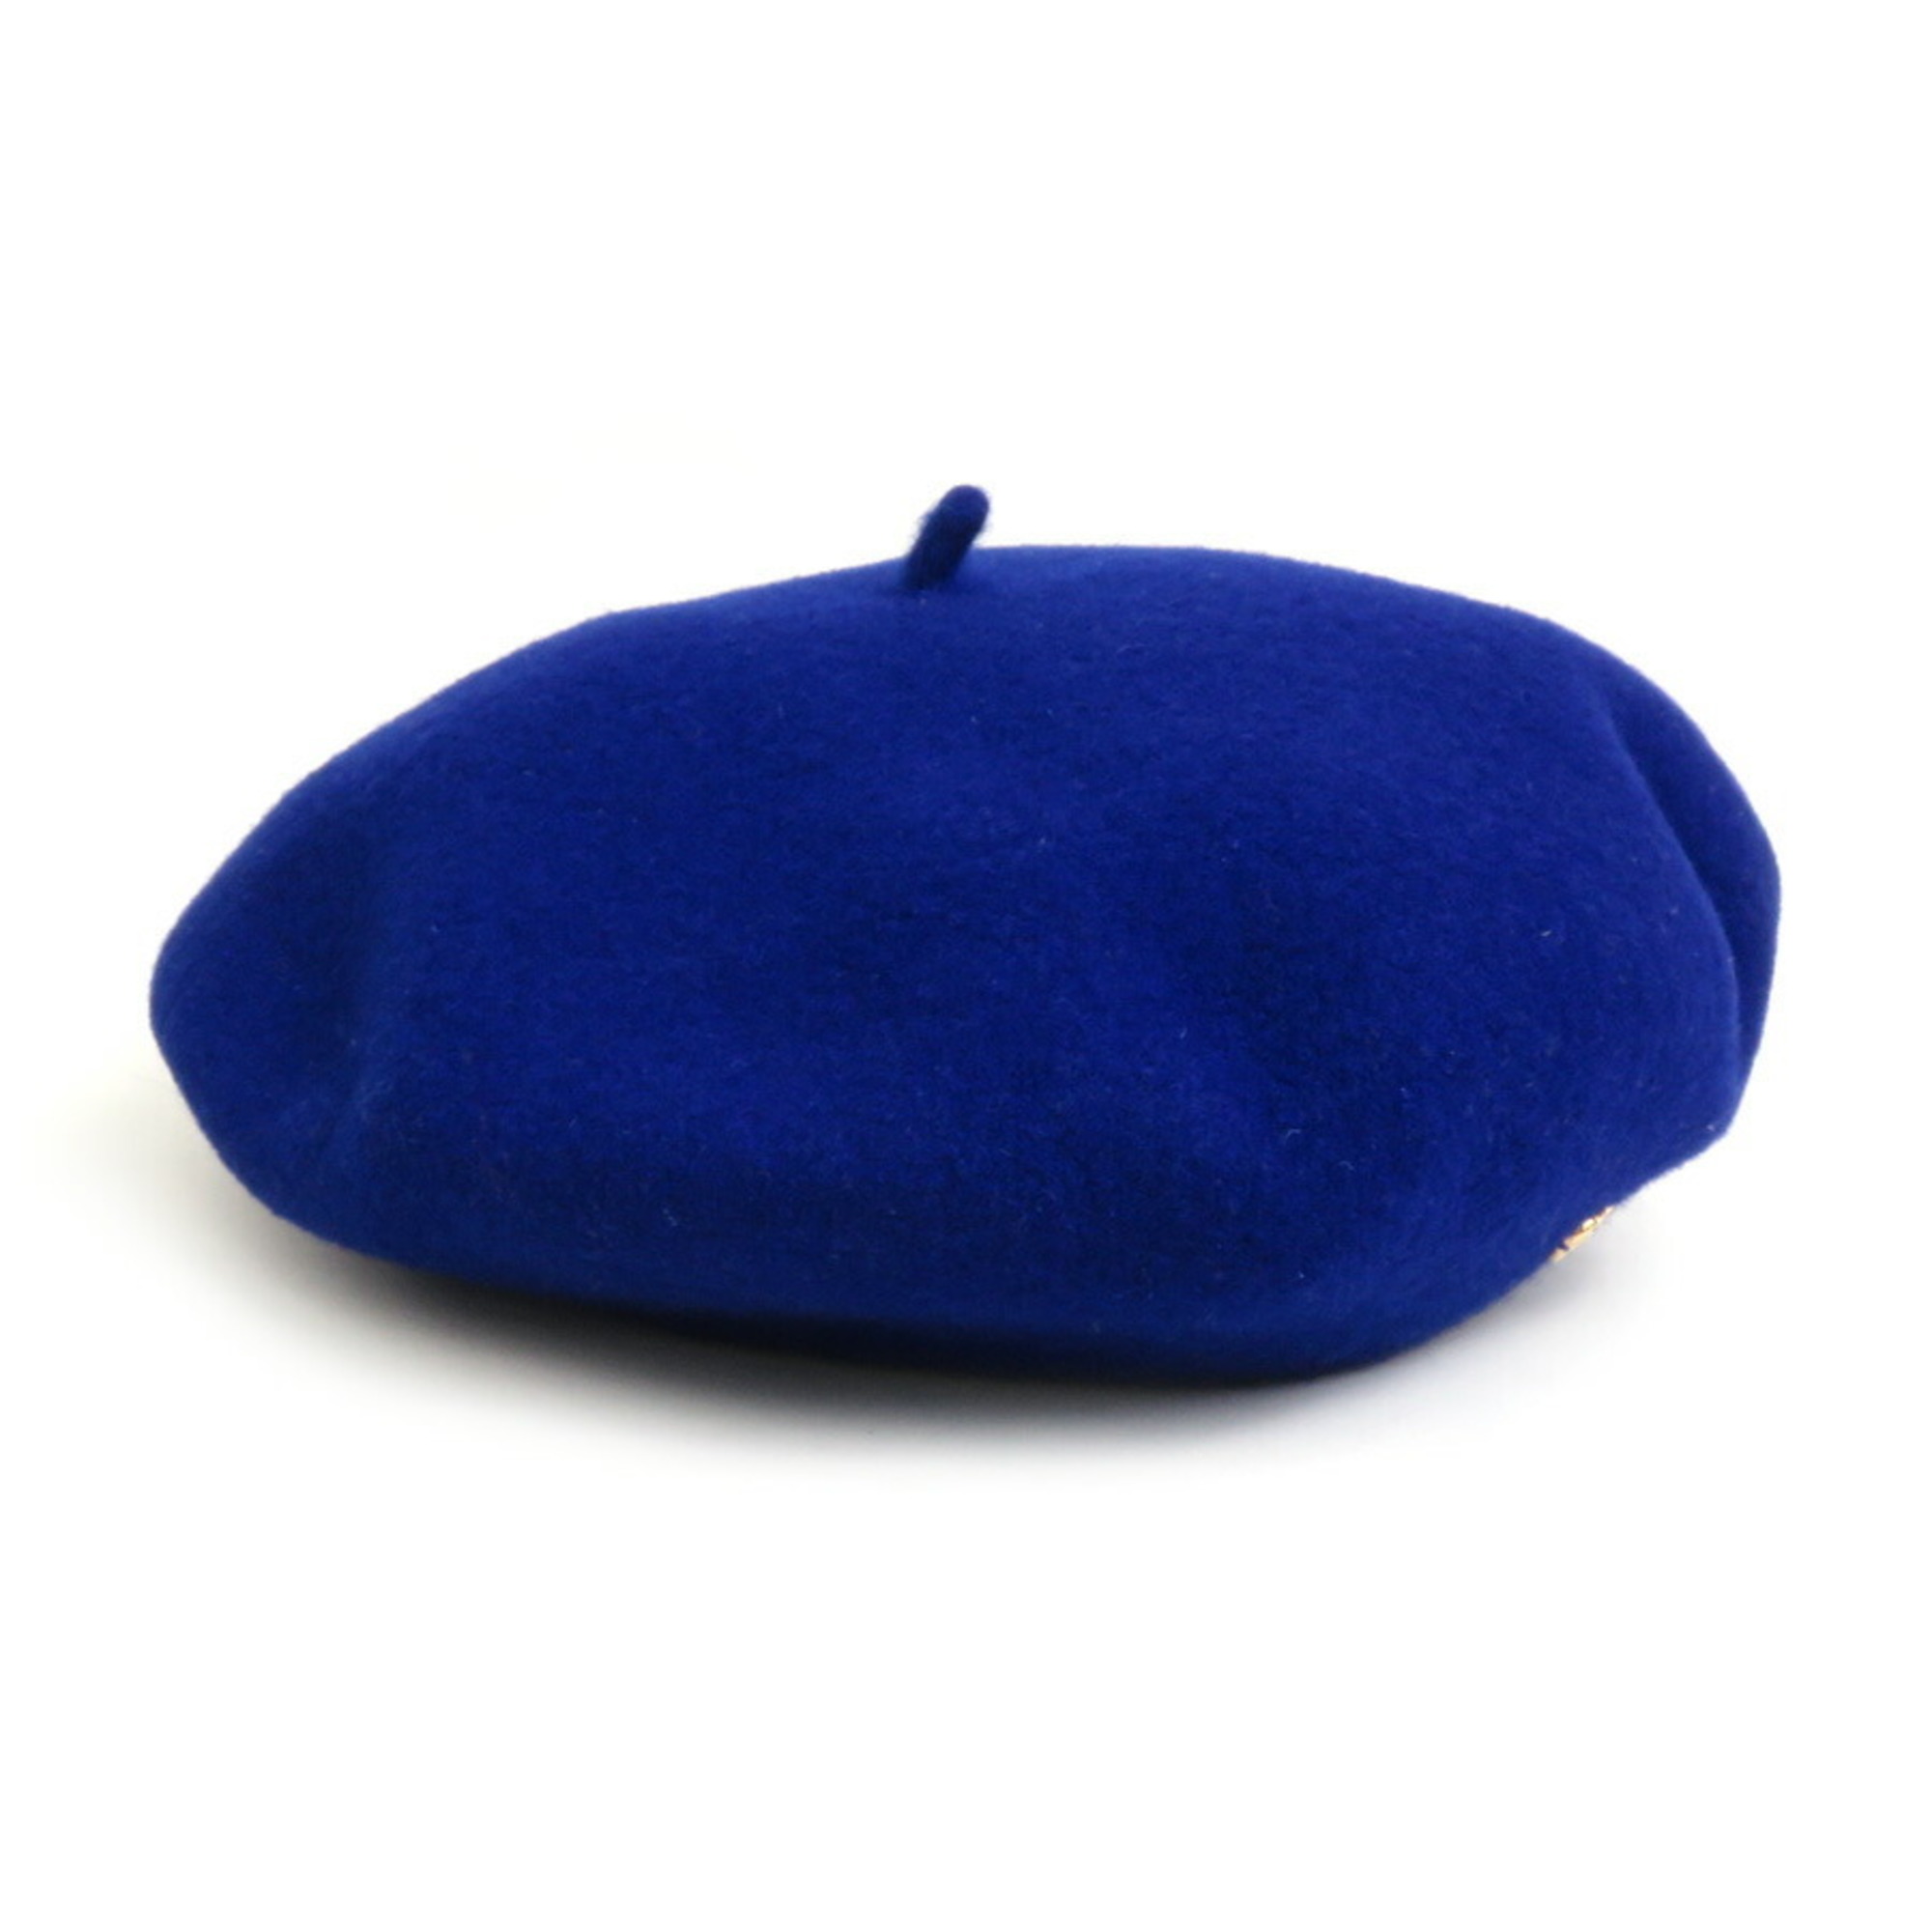 GUCCI beret wool blue ladies